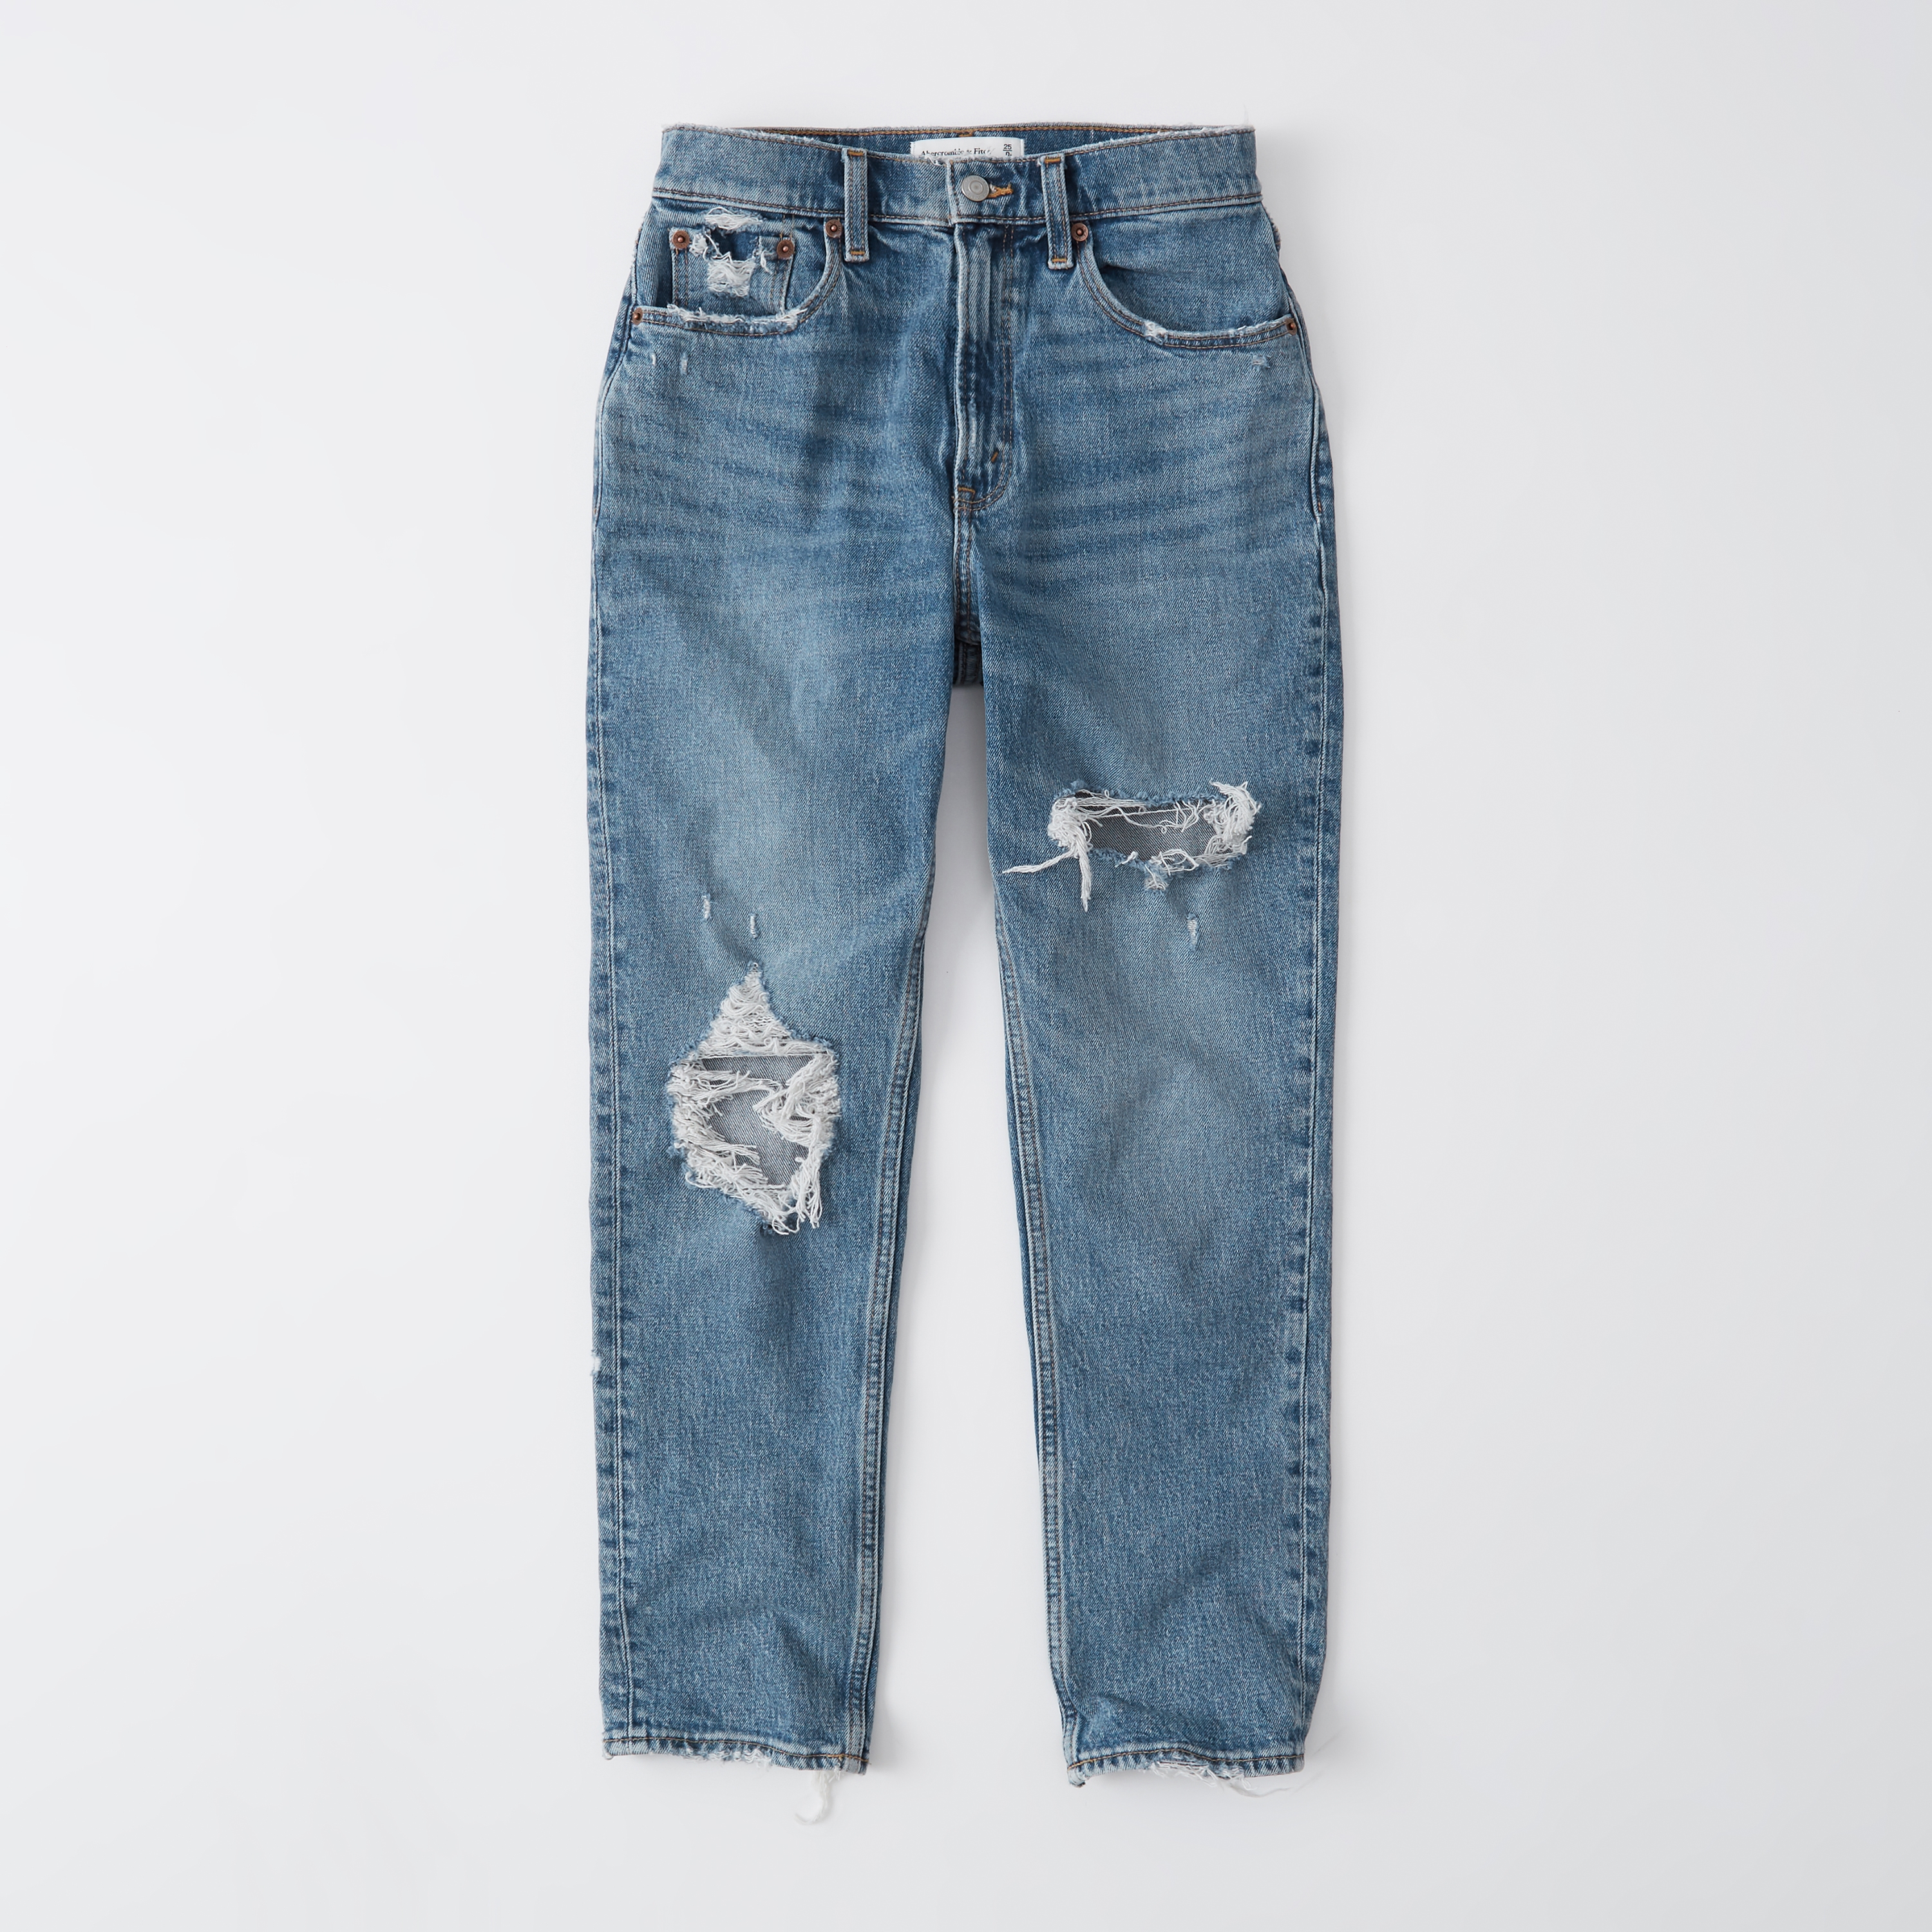 a&f ultra high rise mom jeans